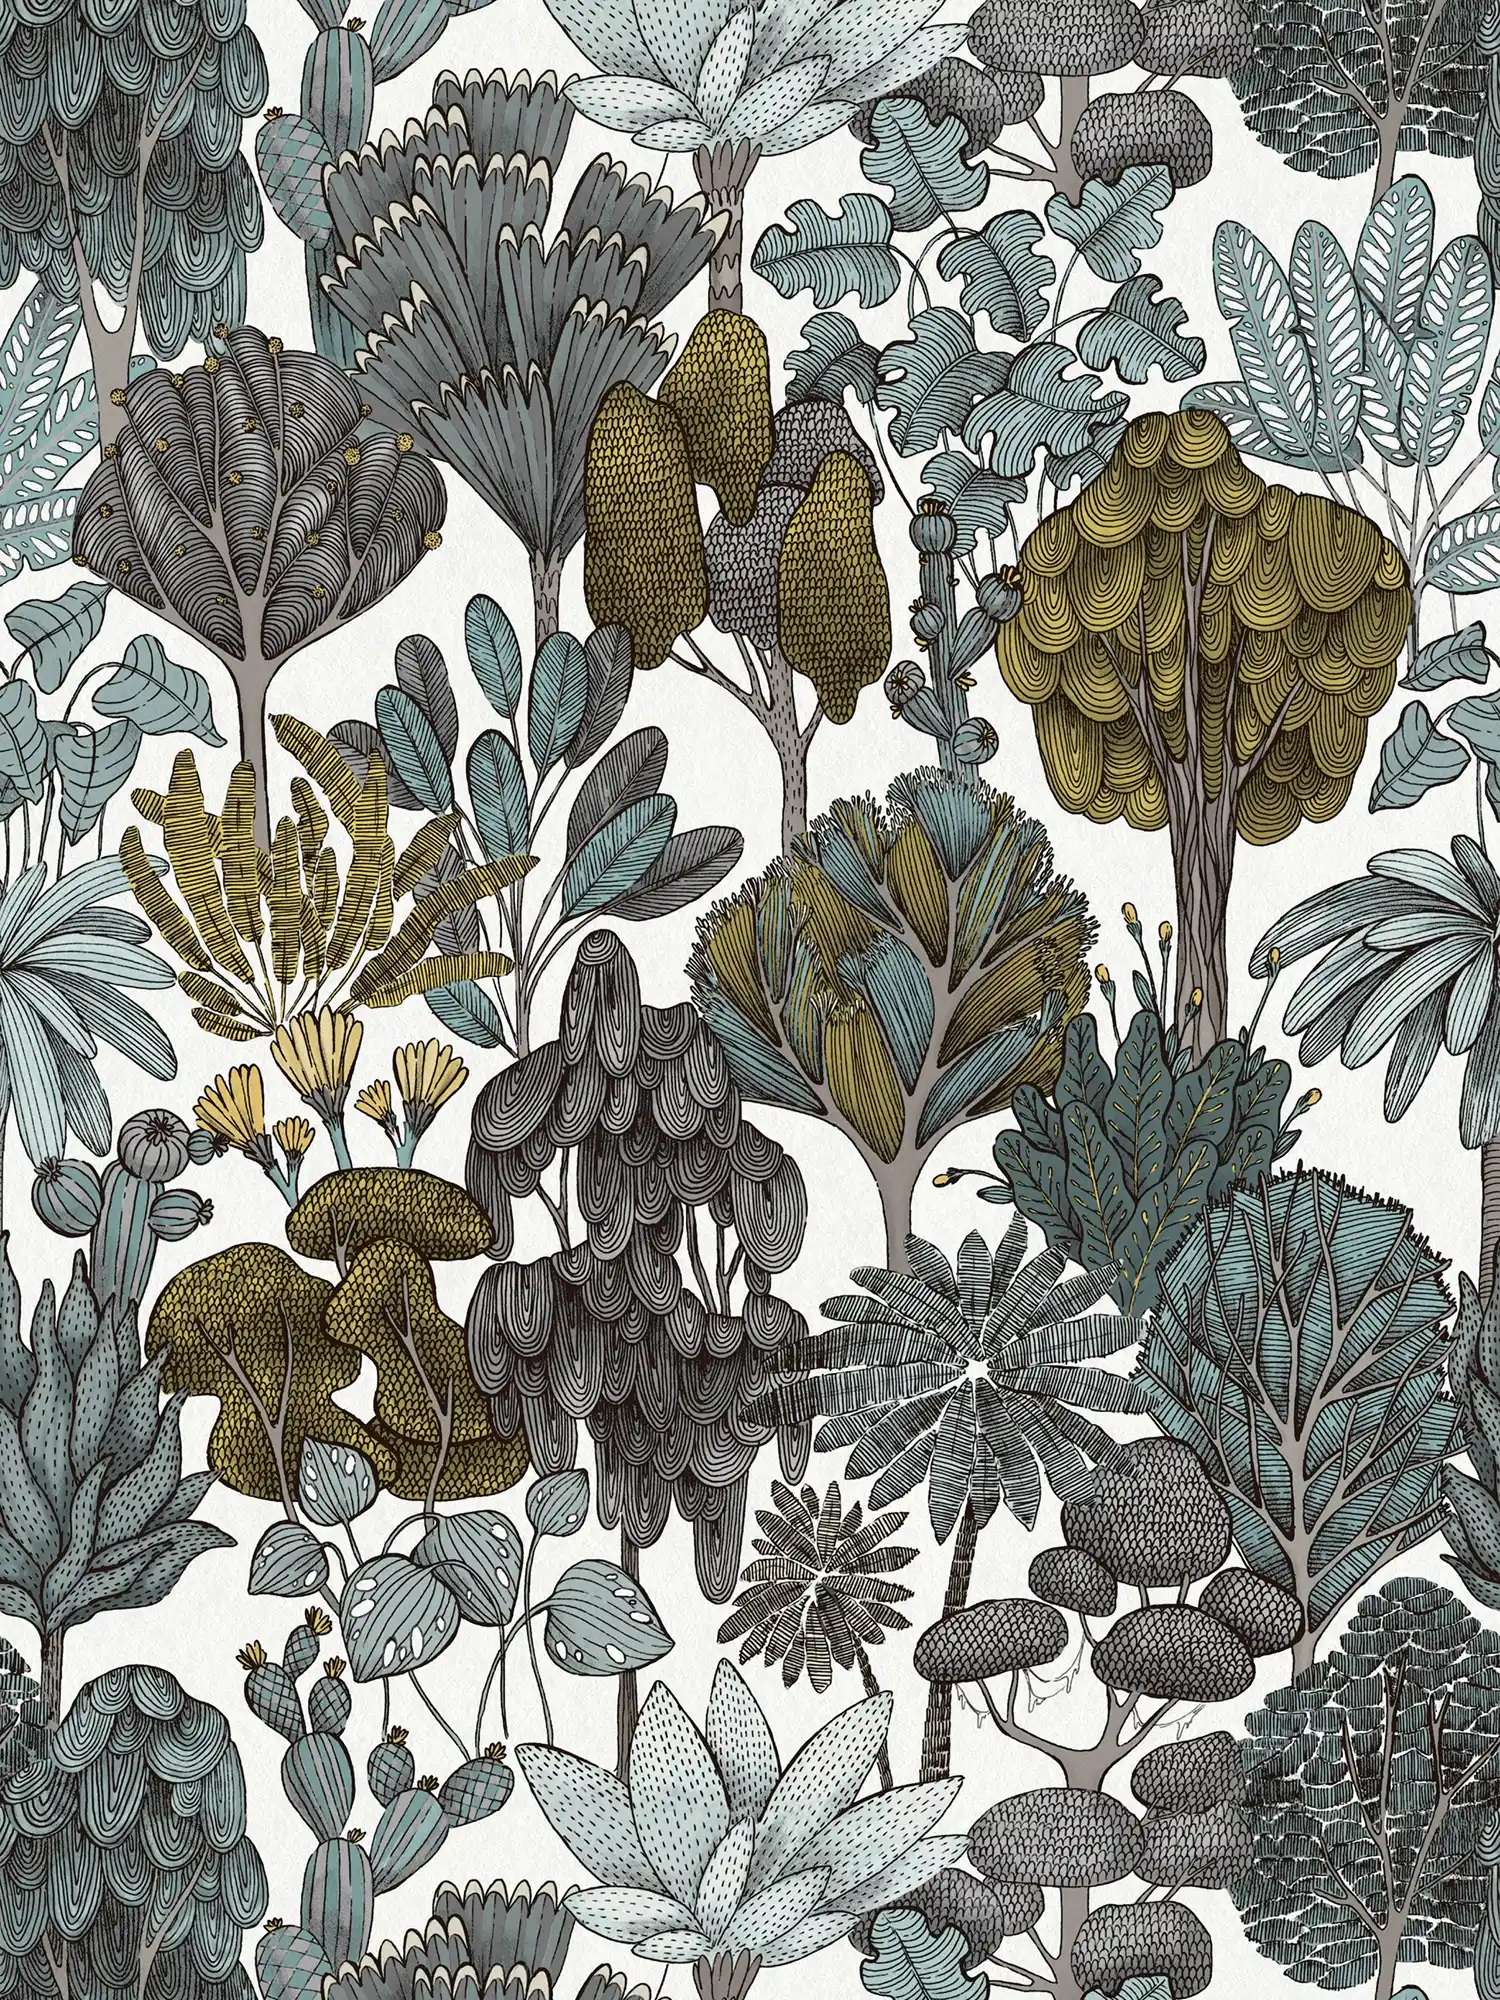         Tapete Grün Grau florales Muster im Doodle Stil – Grün, Grau, Gelb
    